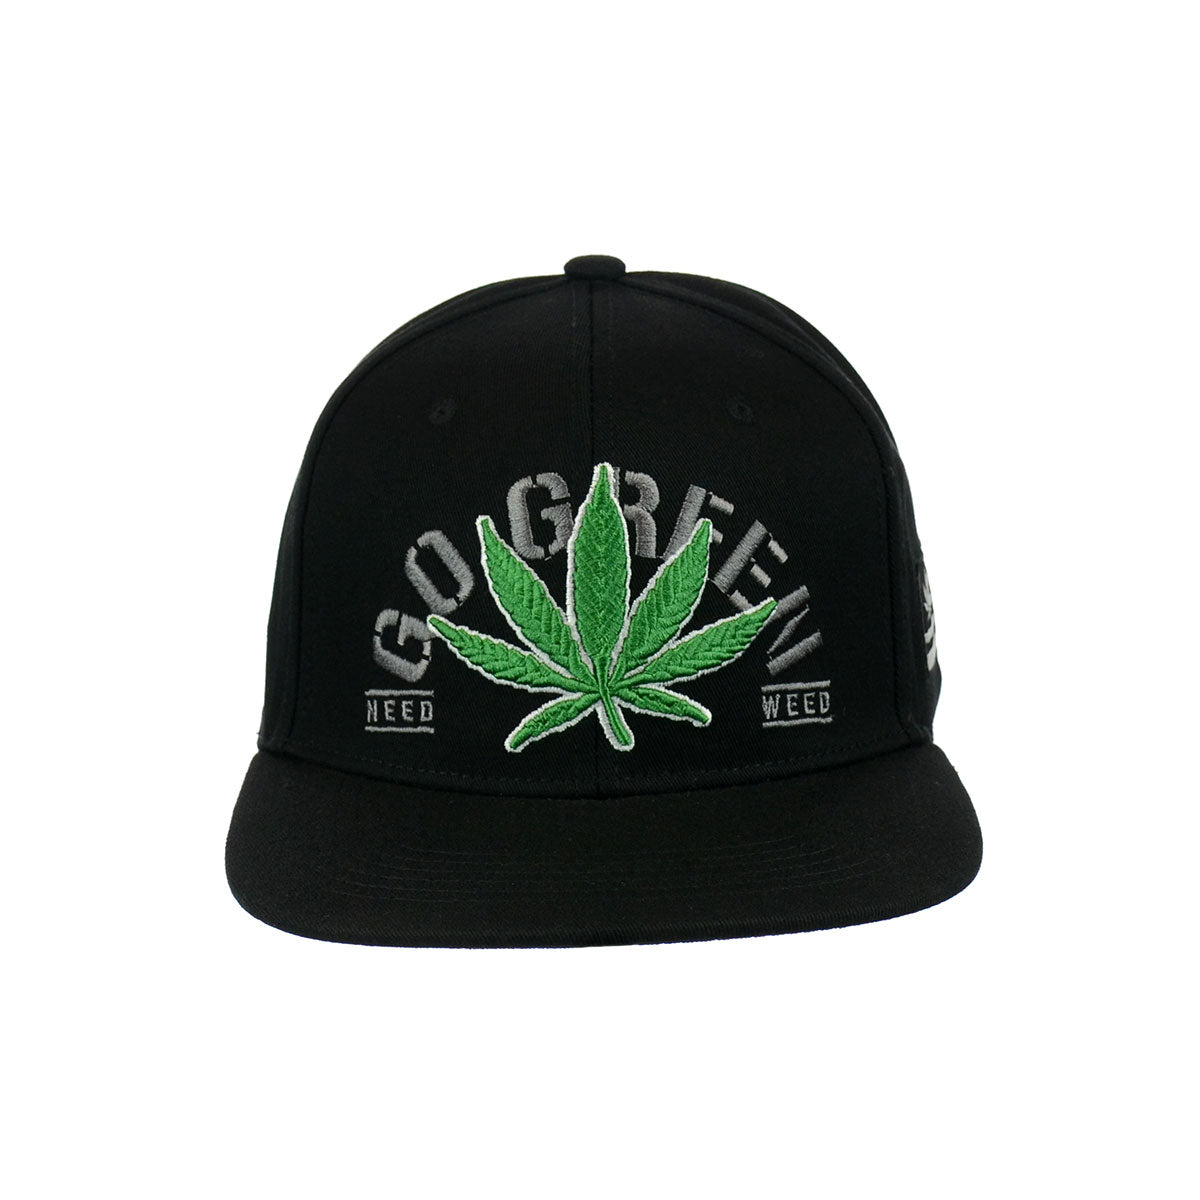 Go Green Leaf Embroidered Snapback Hat